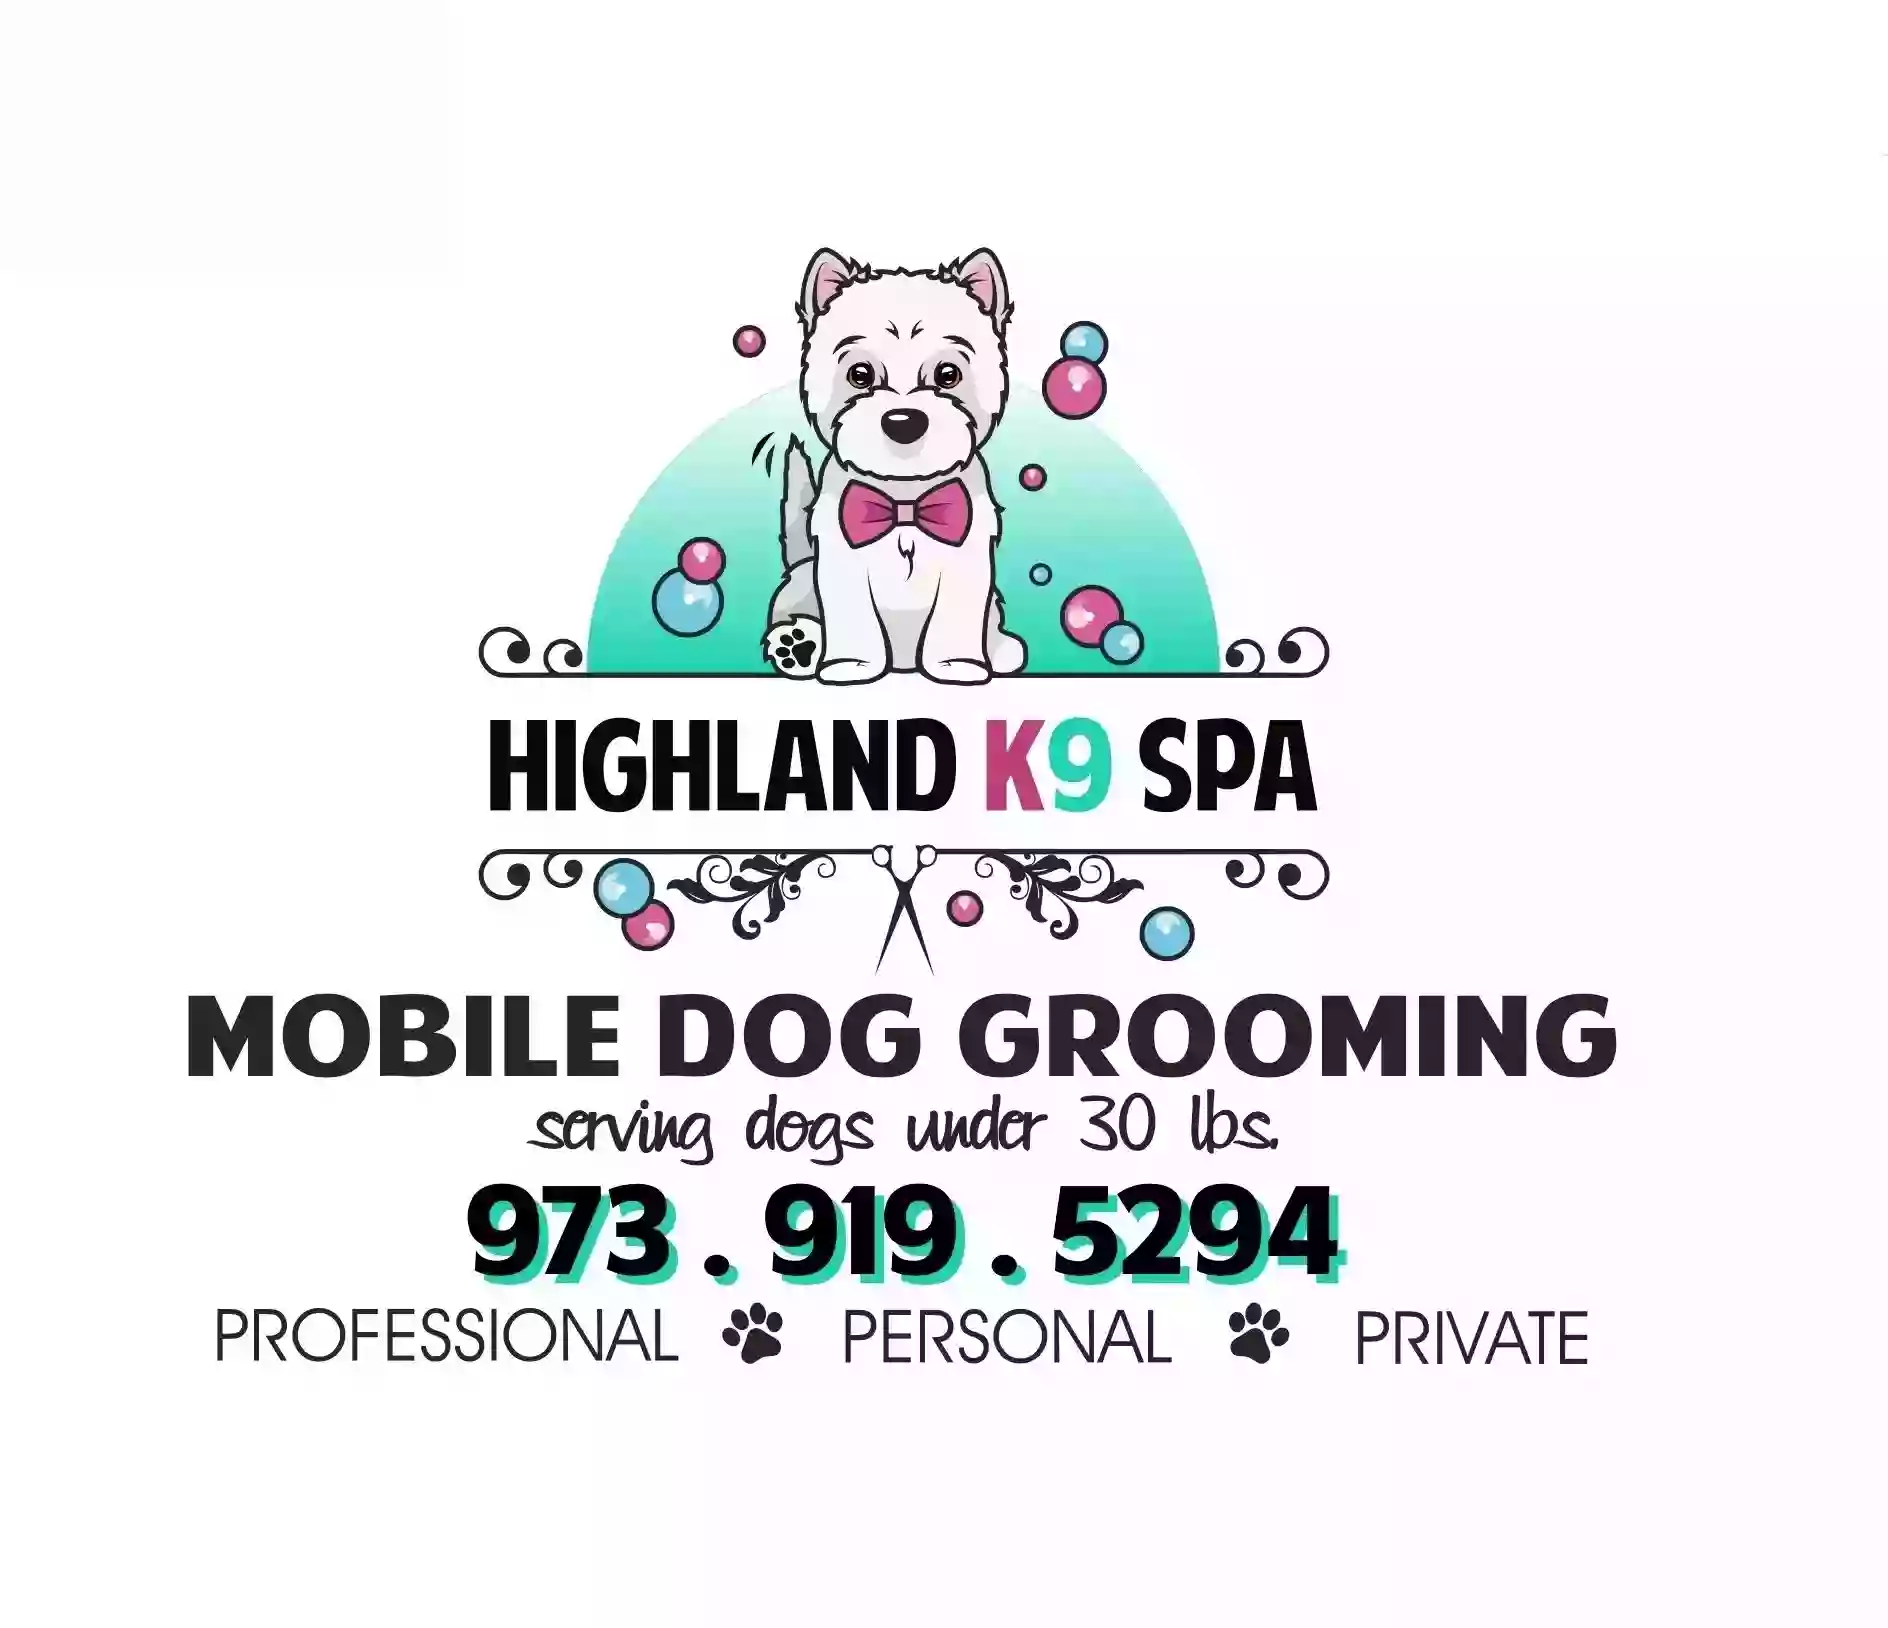 HighlandK9Spa mobile dog grooming